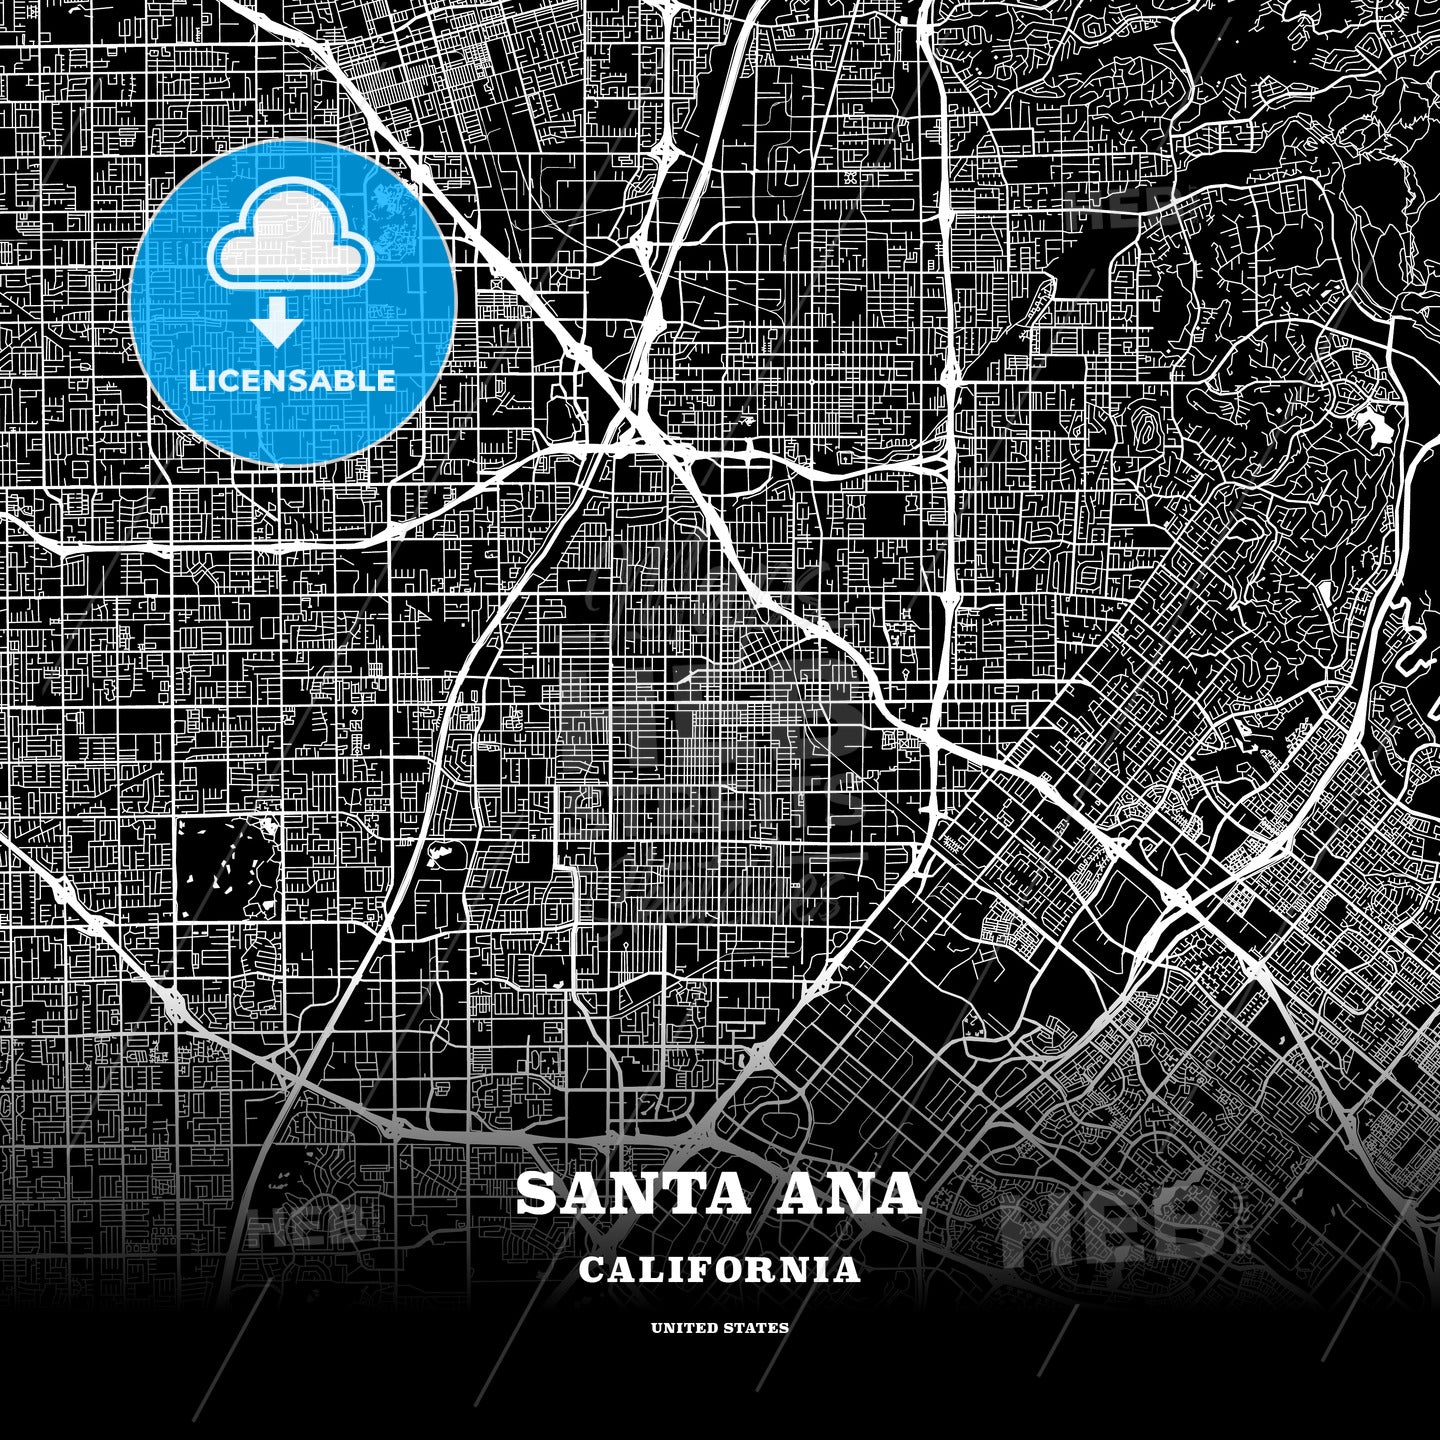 Santa Ana, California, USA map